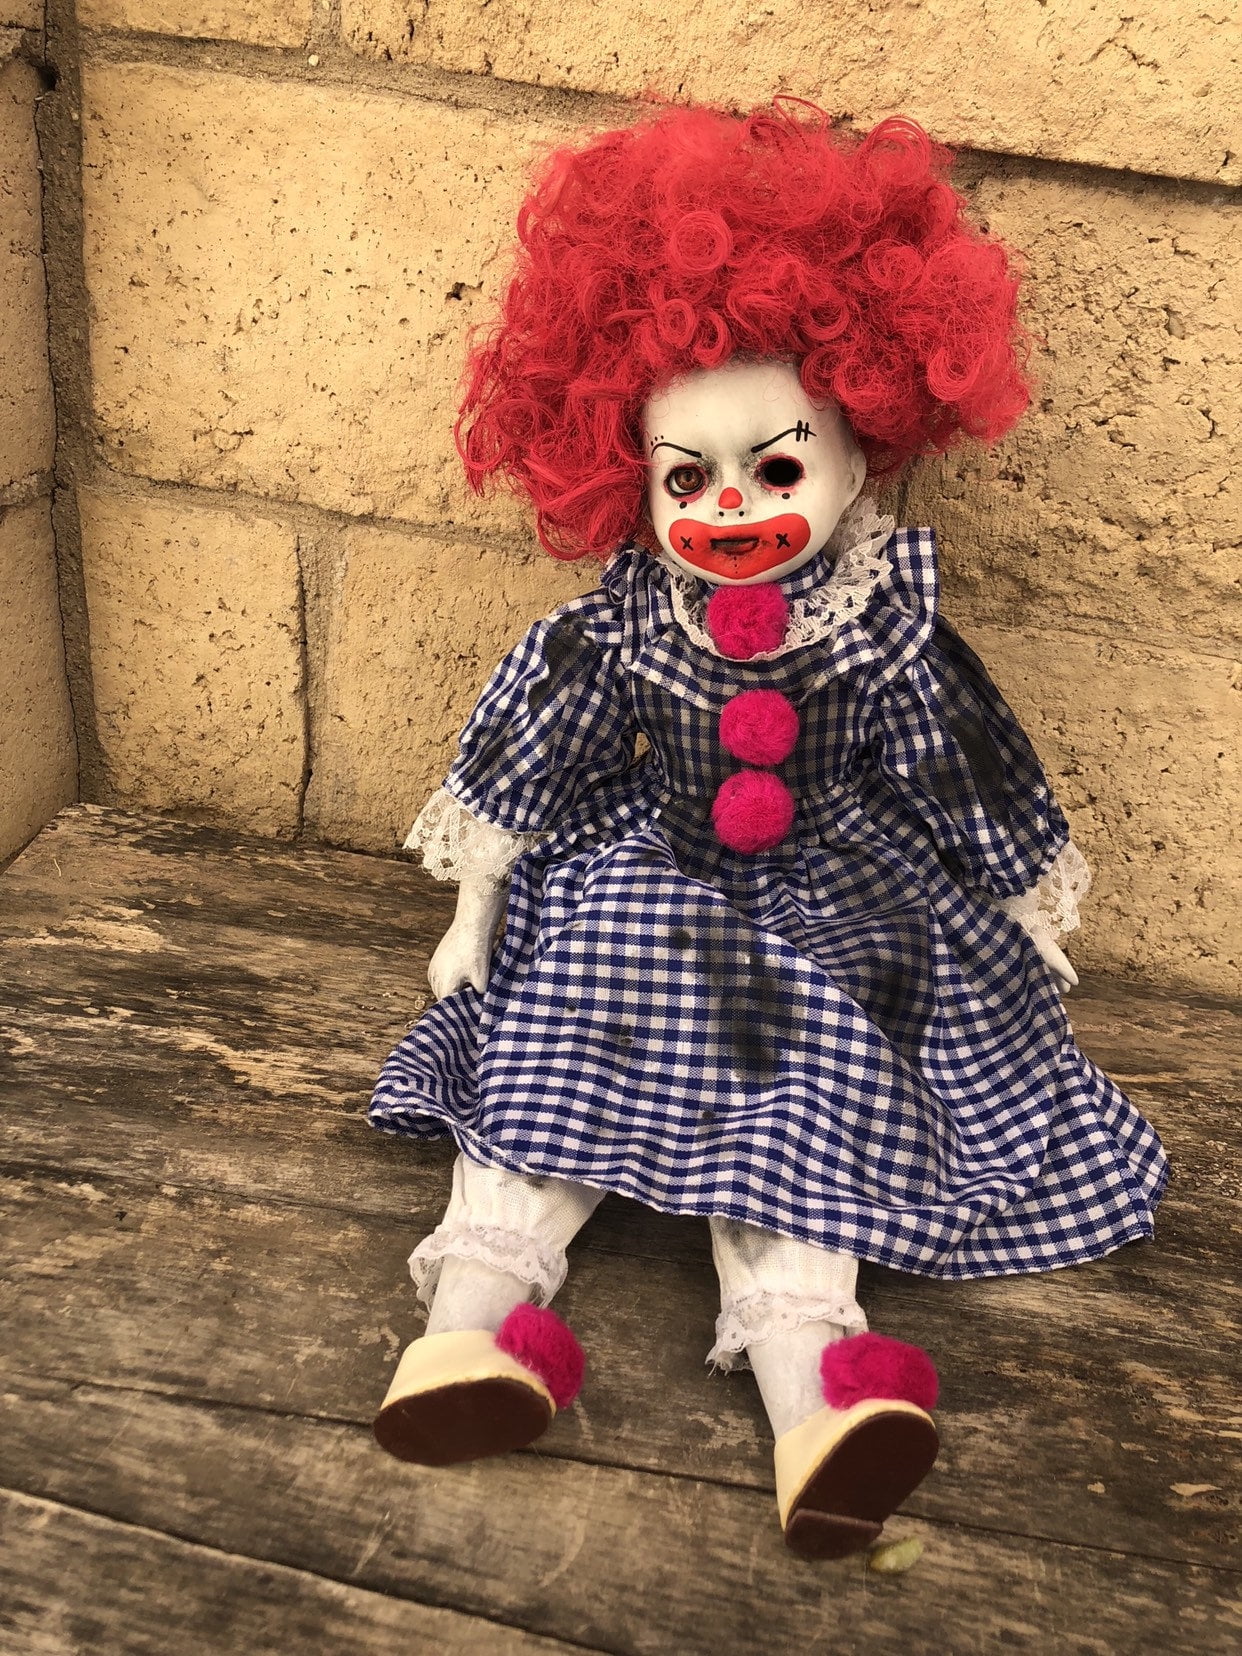 OOAK Sitting Magenta Clown Creepy Horror Doll Art by Christie ...